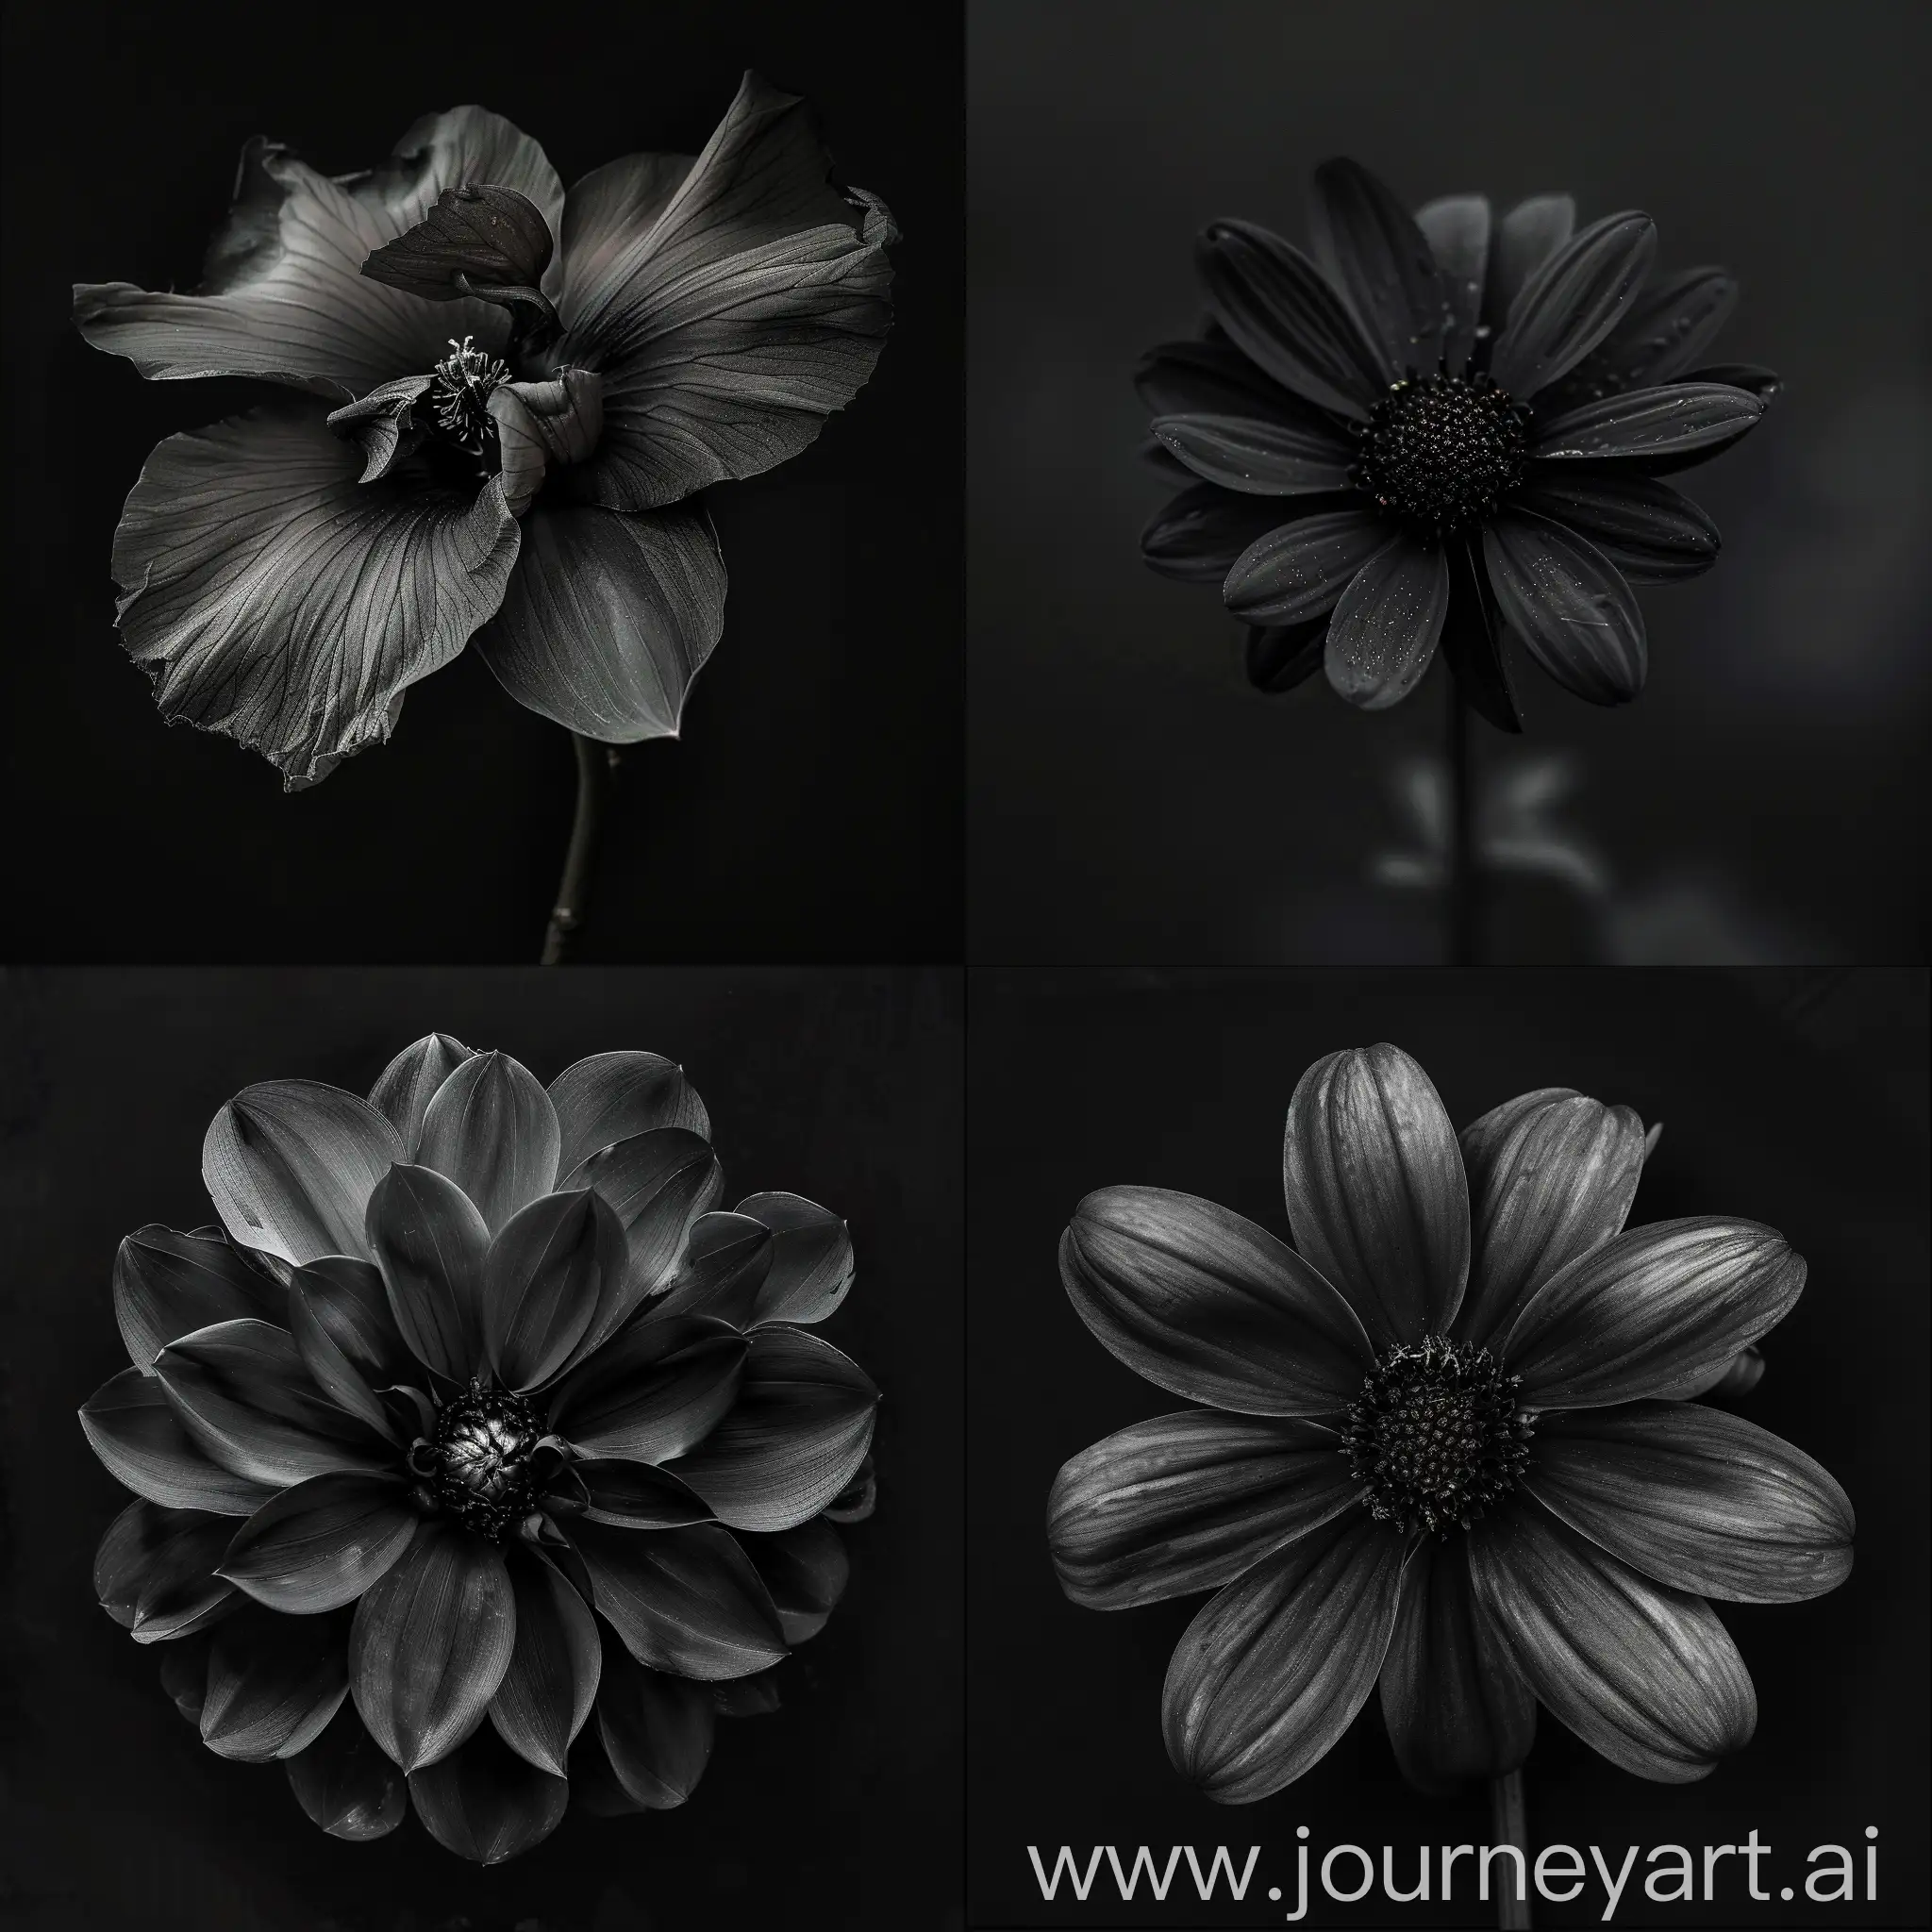 Elegant-Black-Flower-Photography-Minimalistic-Beauty-Captured-in-Monochrome